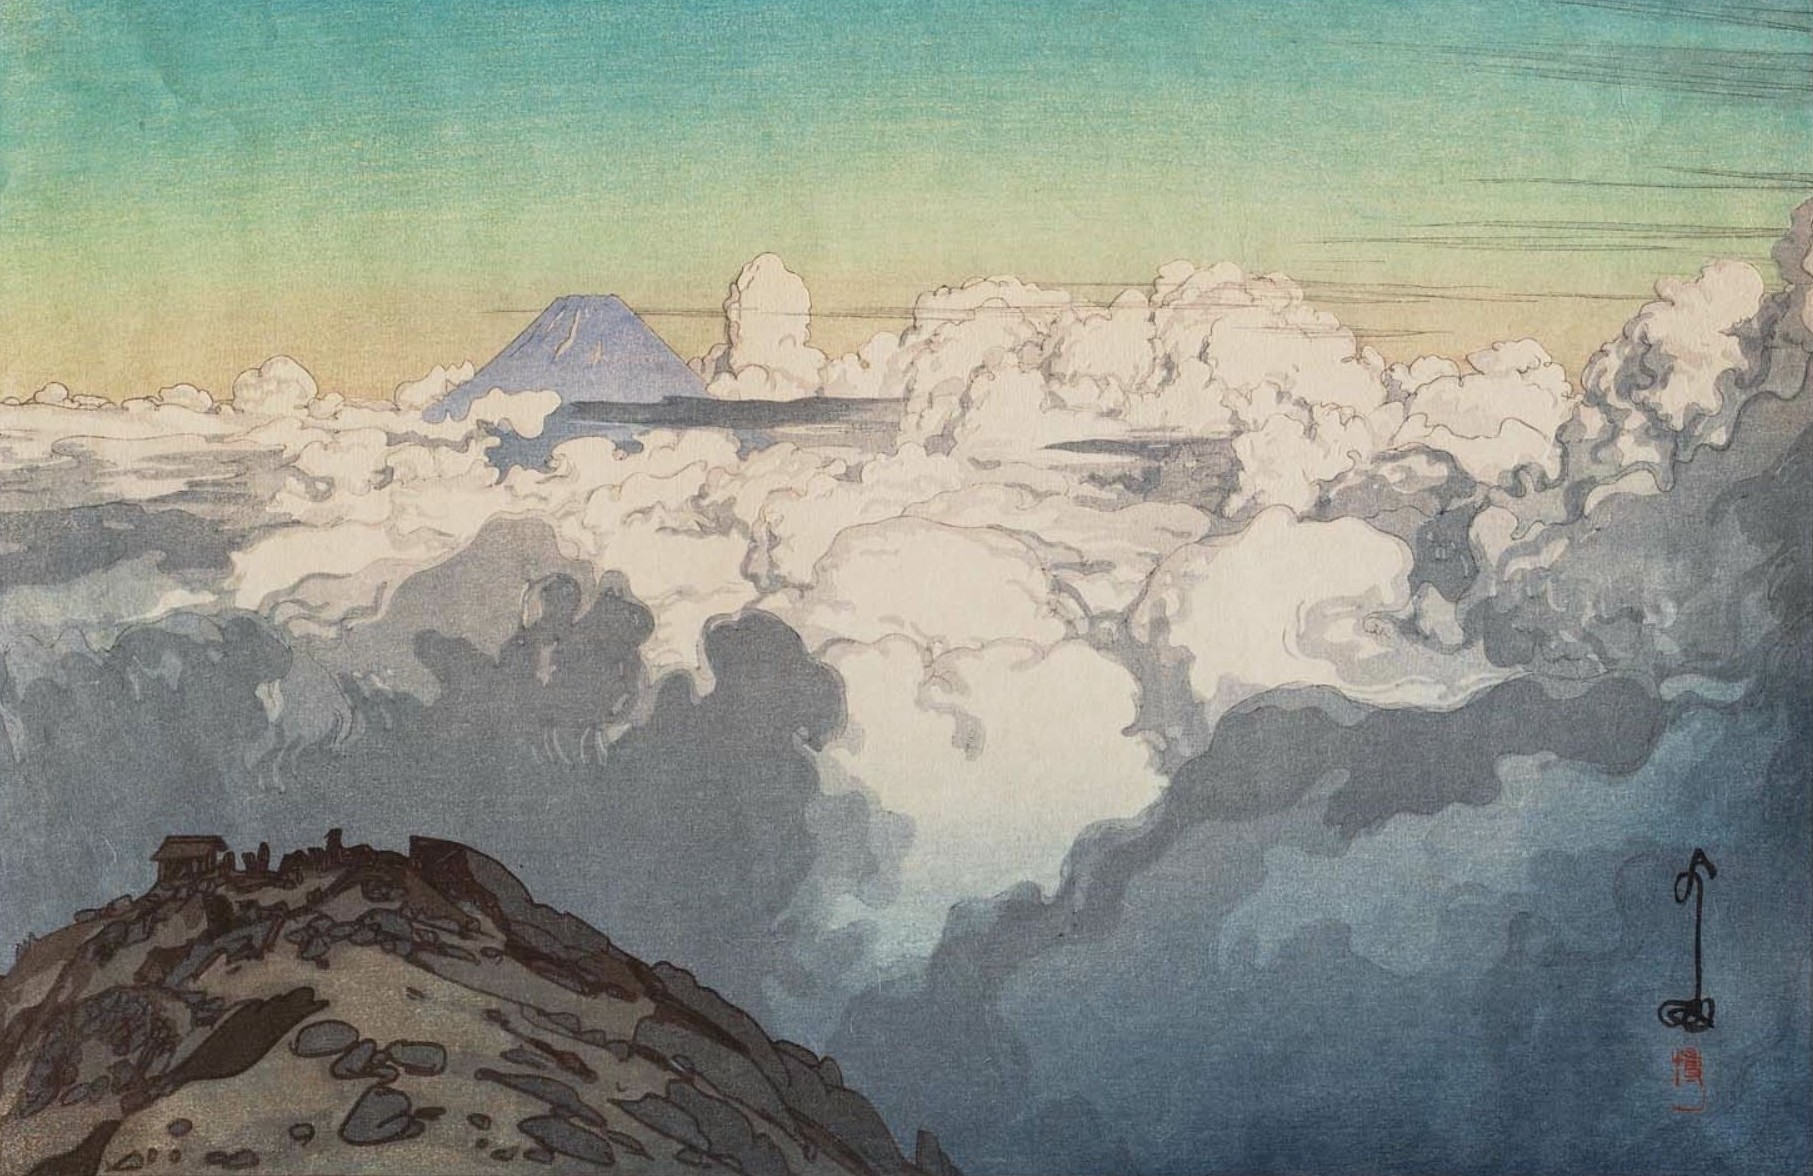 Yoshida Hiroshi Artwork Japanese Painting Mountains Clouds 1813x1176